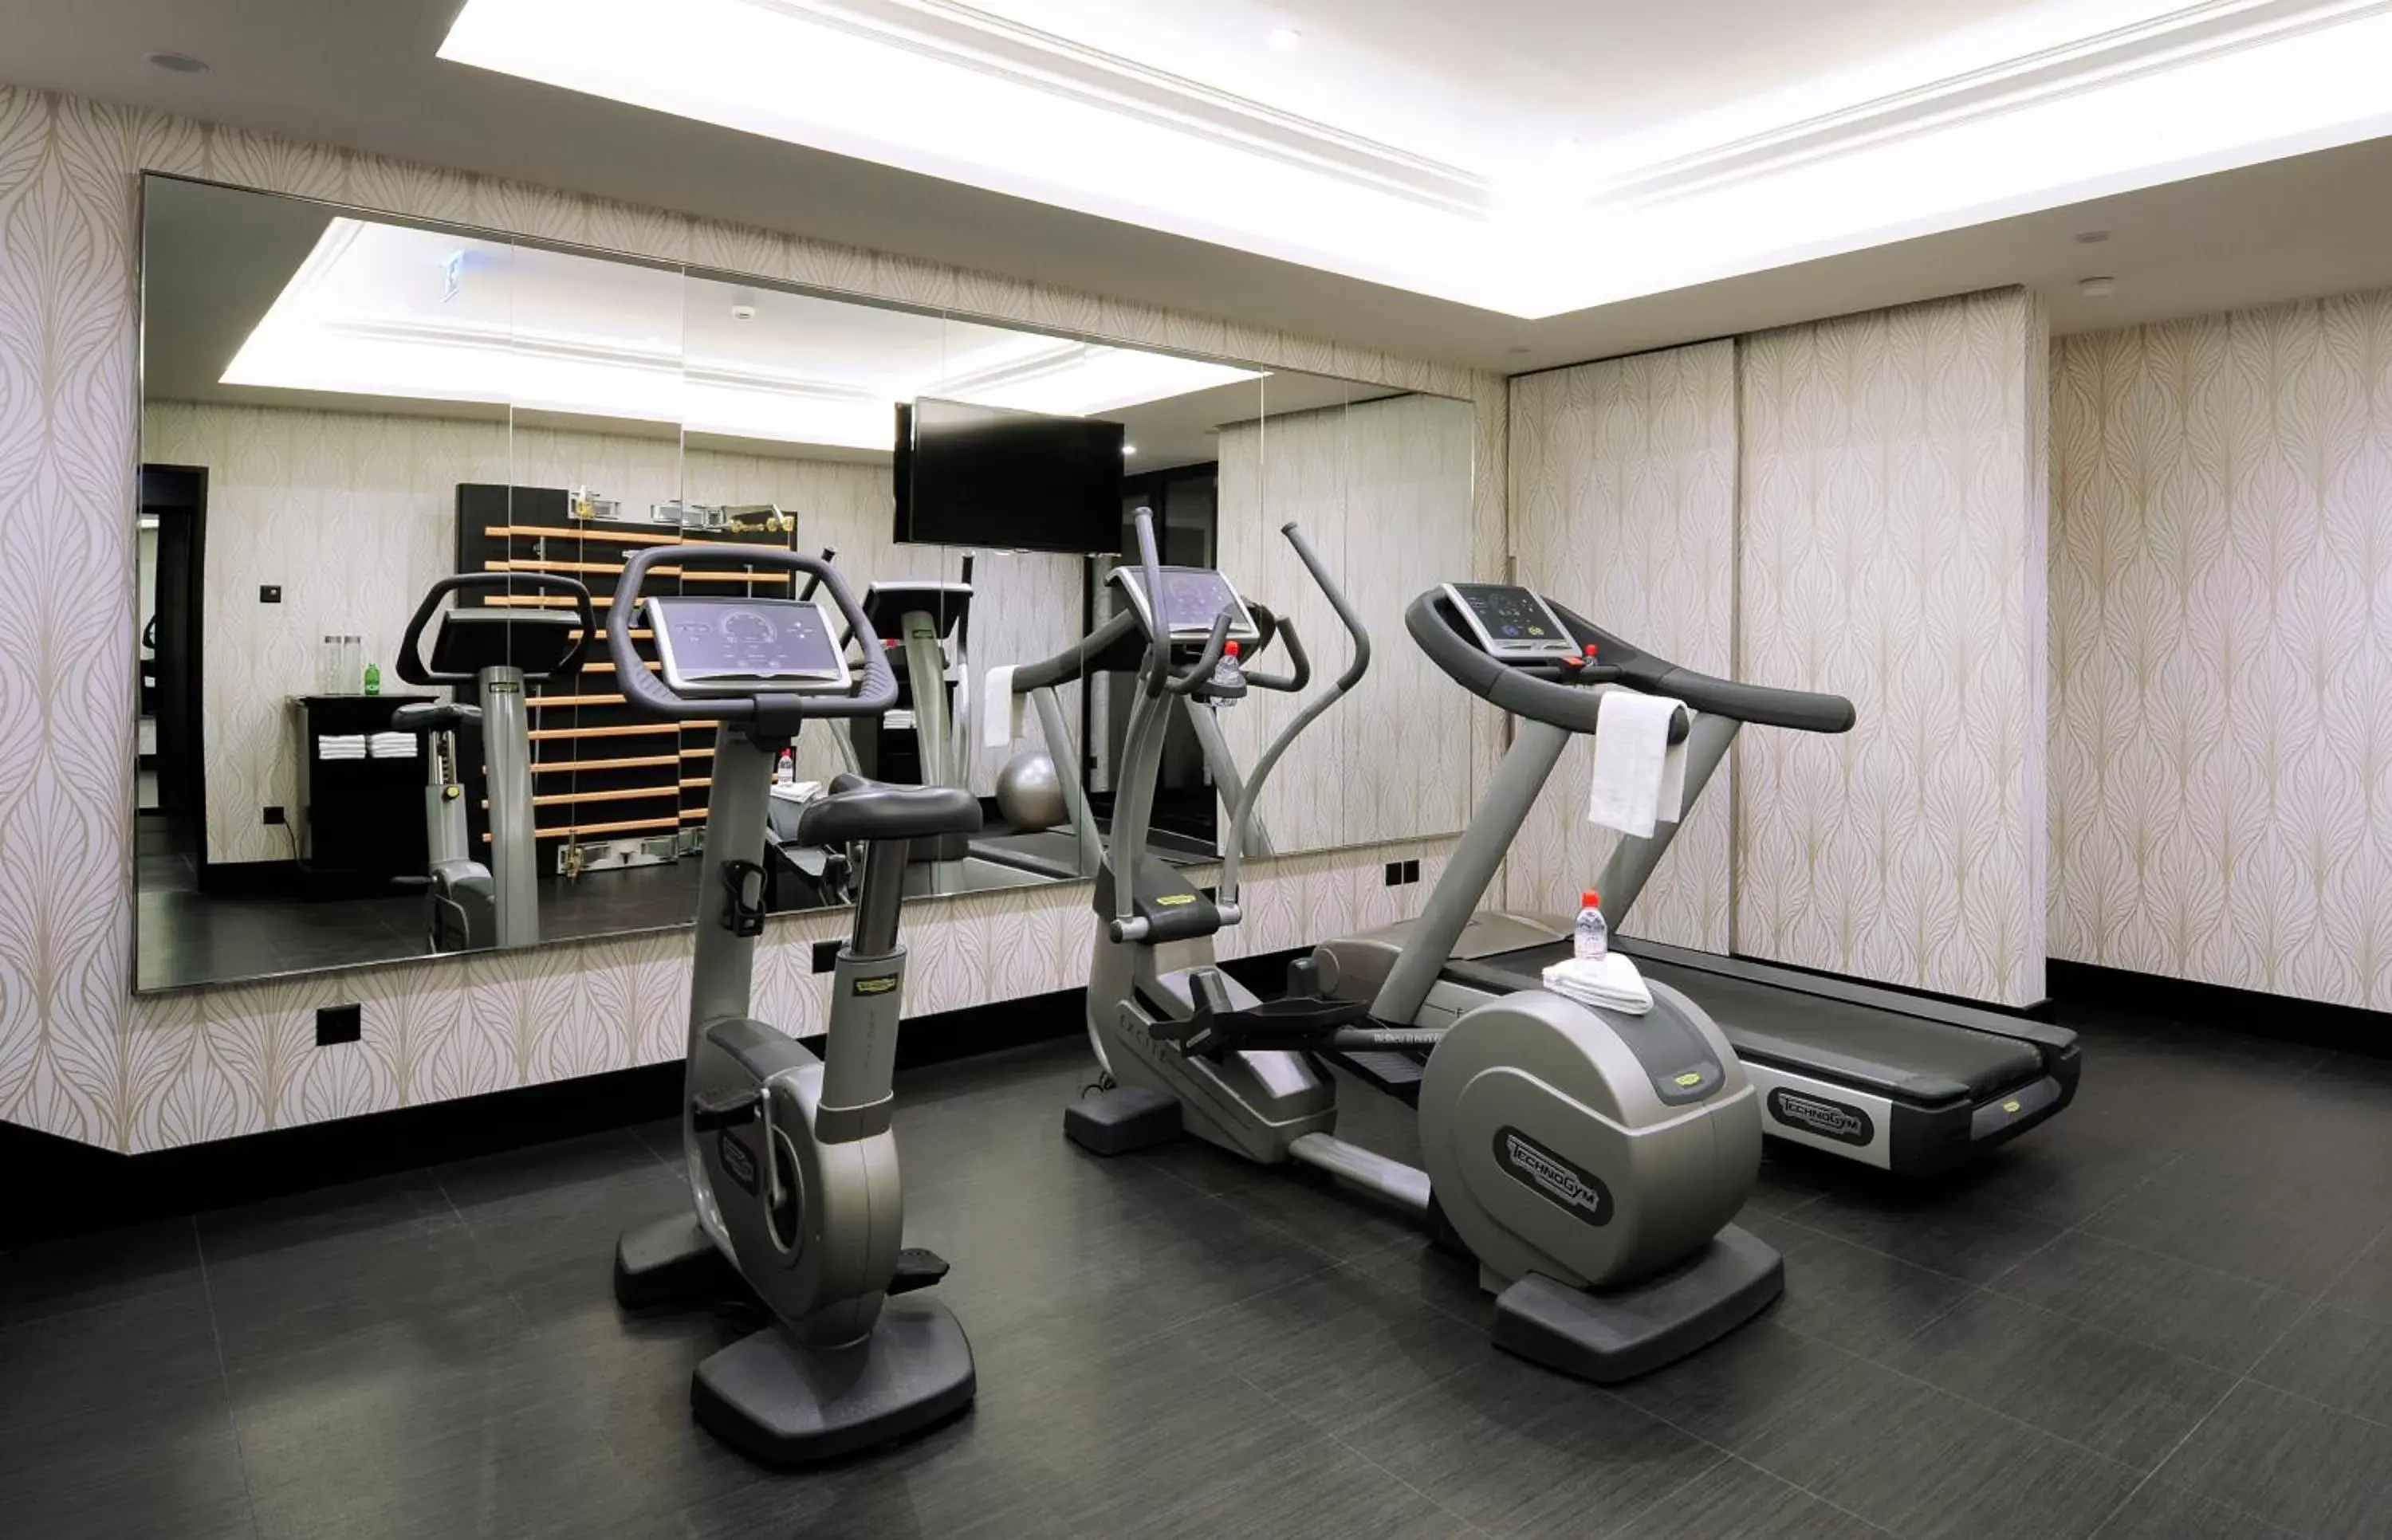 Fitness centre/facilities, Fitness Center/Facilities in Tiffany Hotel